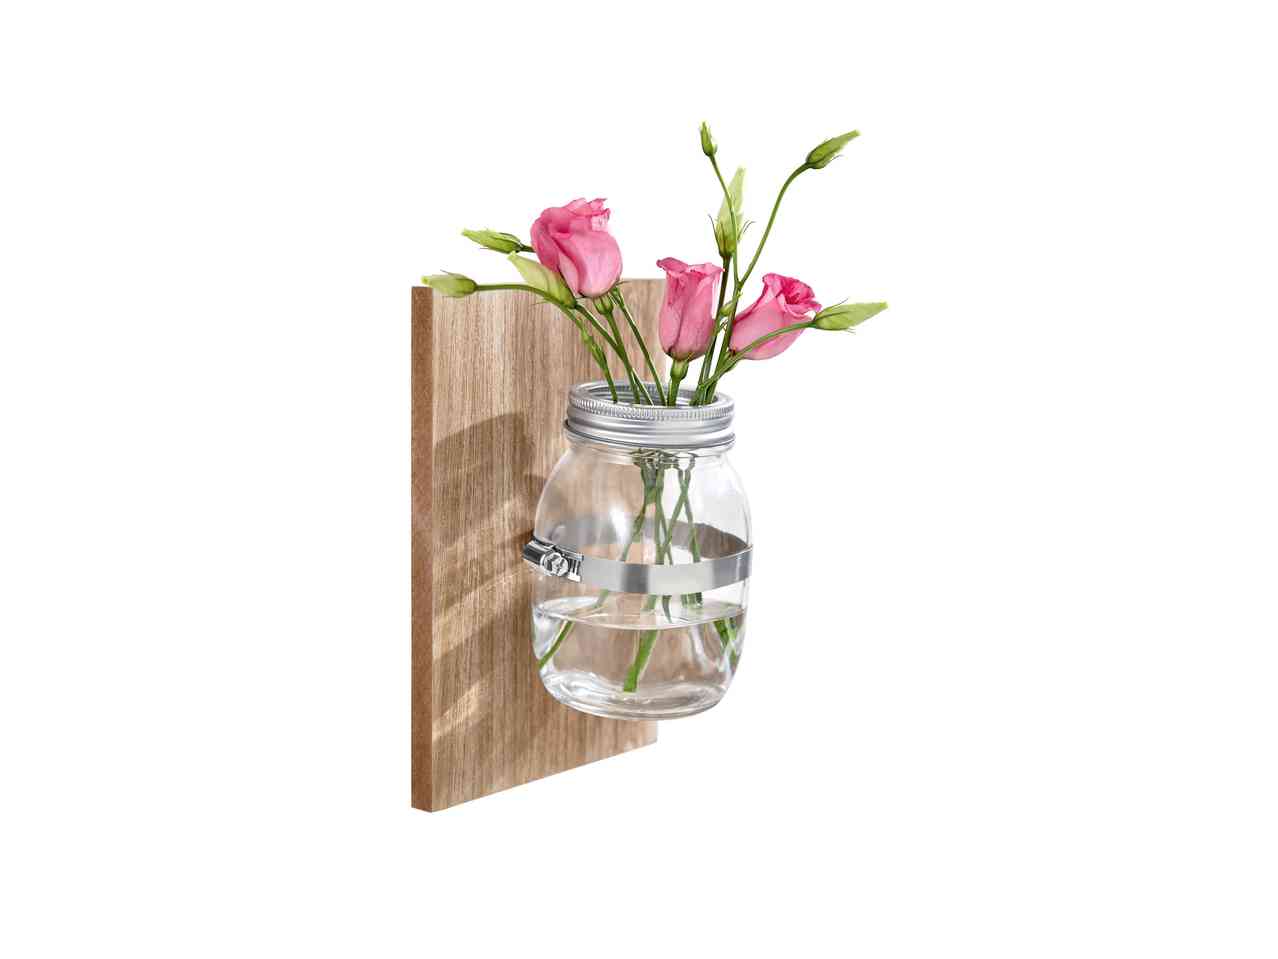 Flower Vase with Wooden Mount